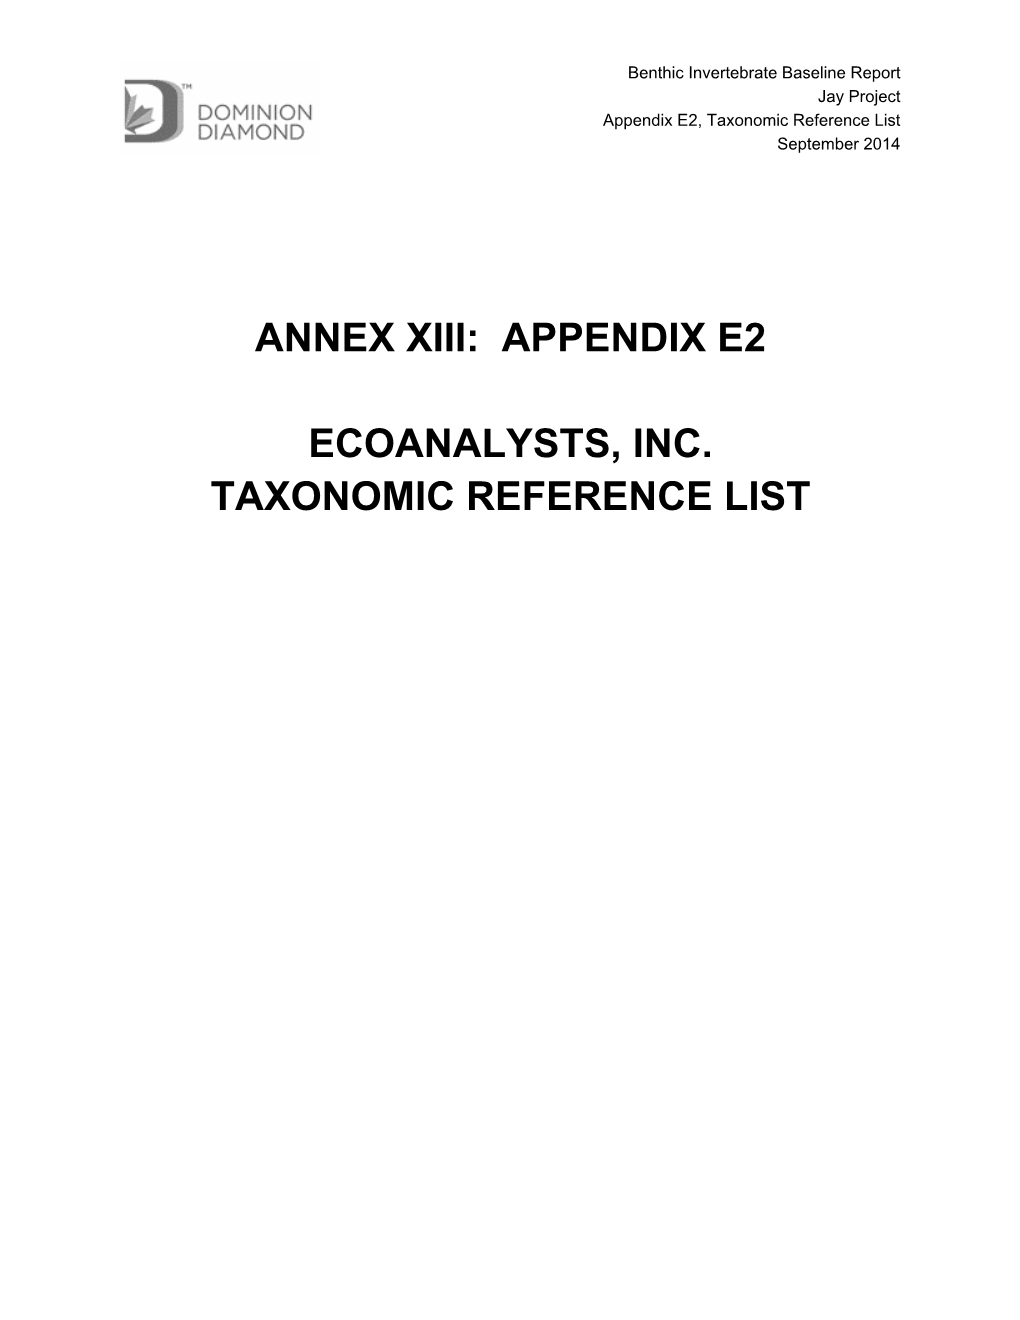 Annex Xiii: Appendix E2 Ecoanalysts, Inc. Taxonomic